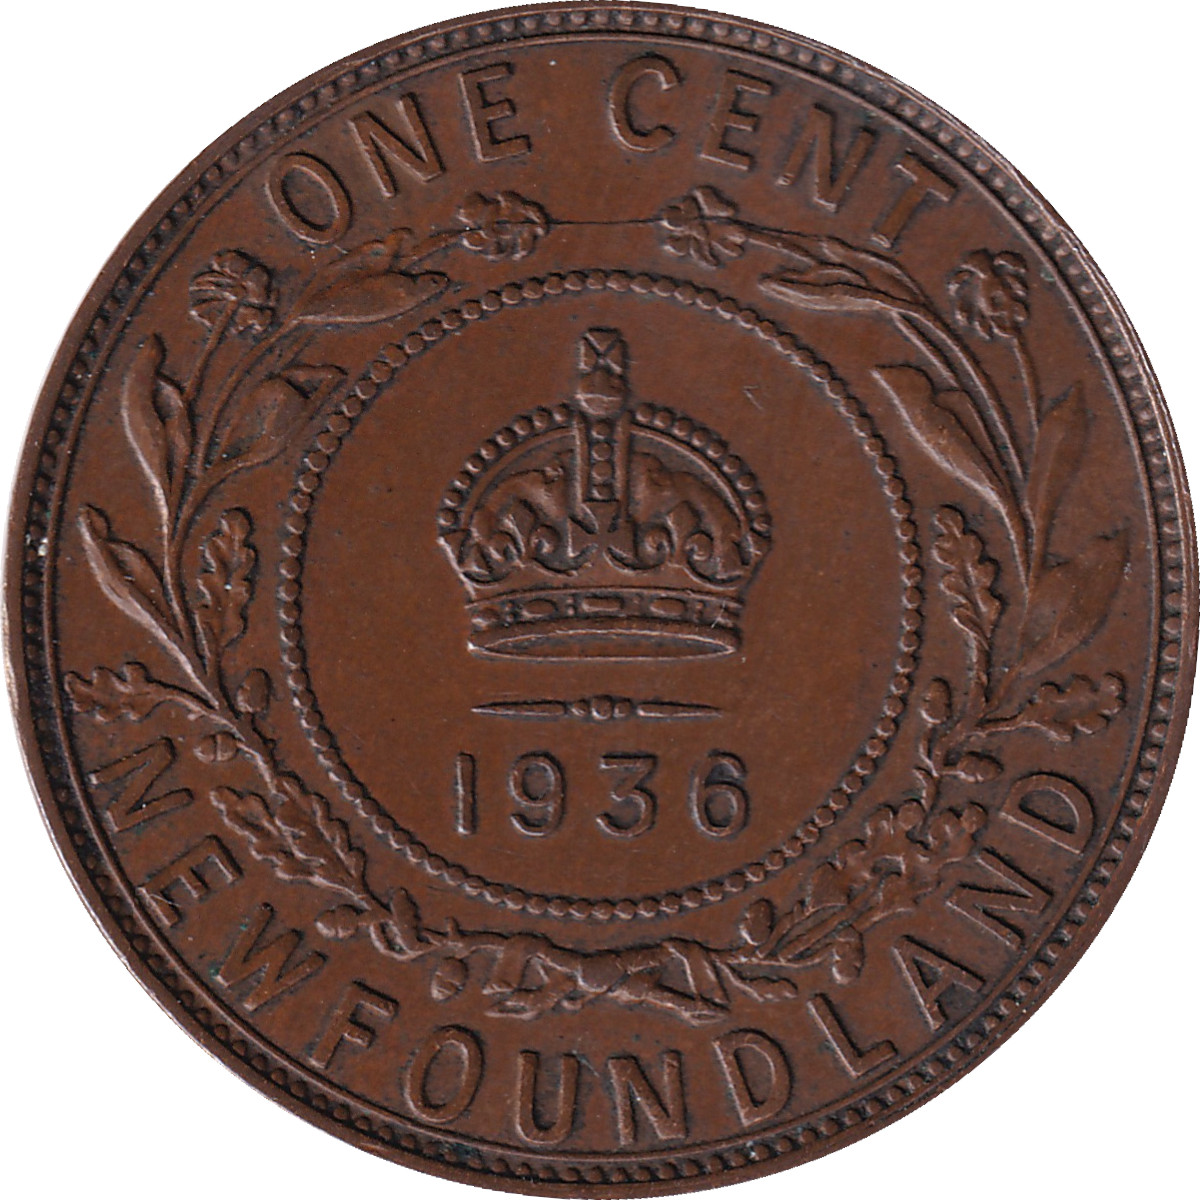 1 cent - George V